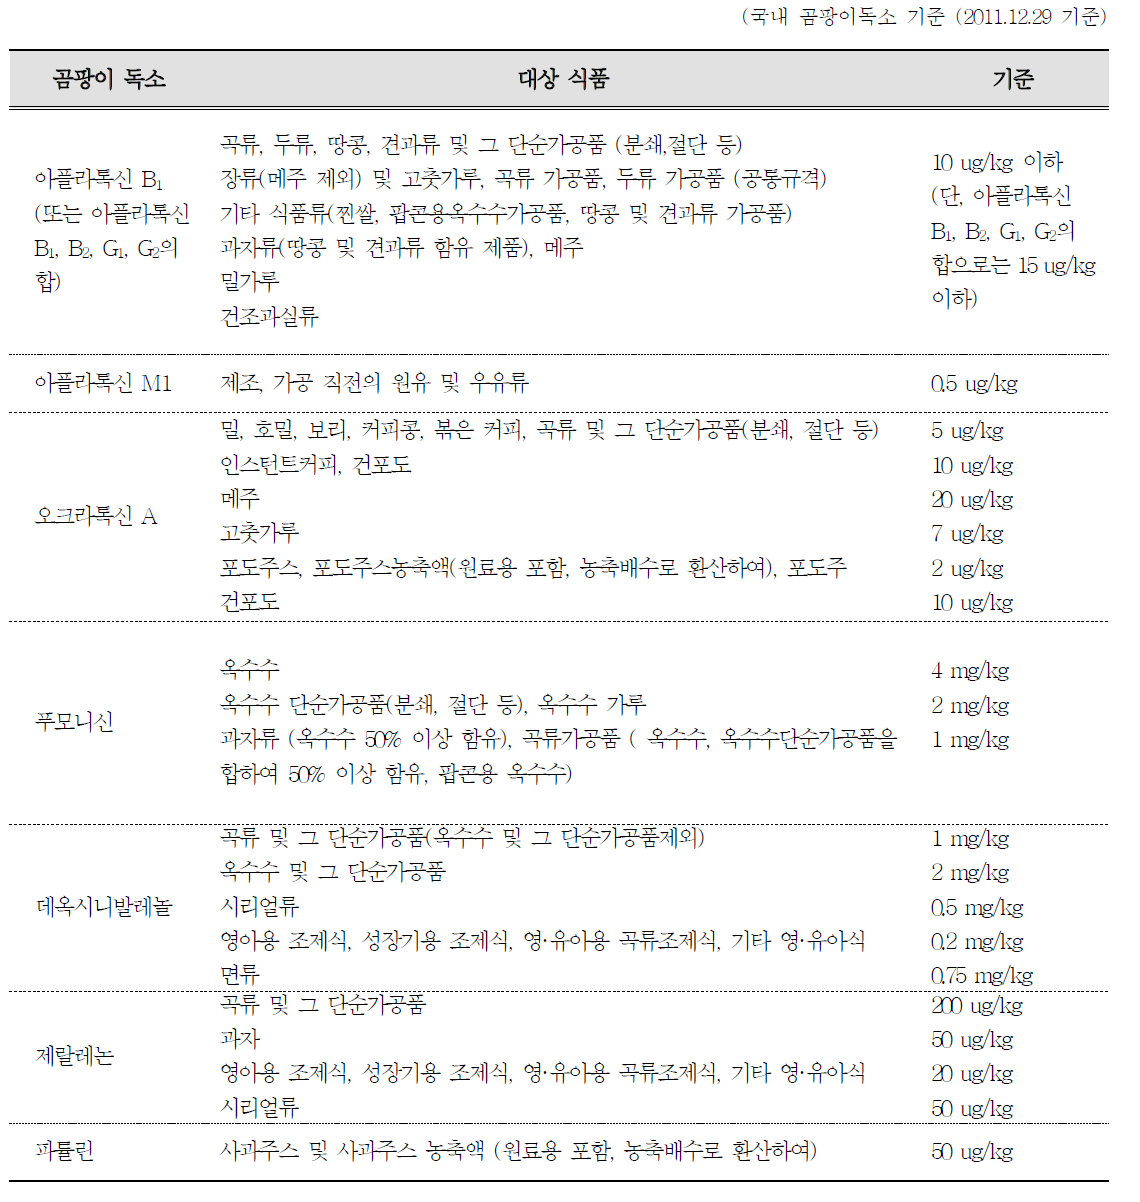 Regulatory limits for mycotoxin in food in Korea (in 2011)